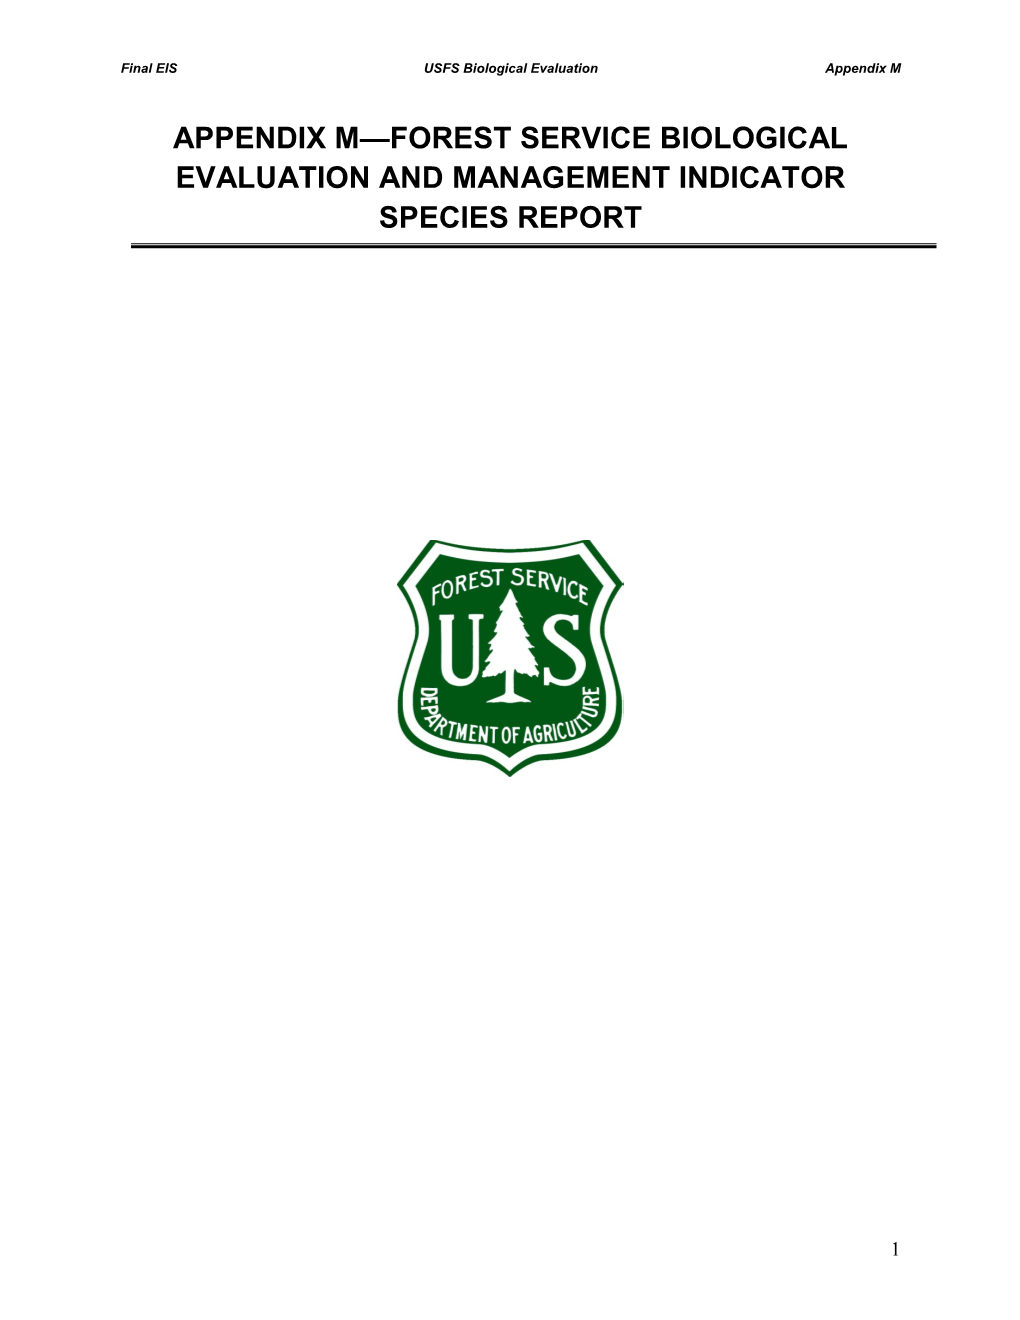 Appendix M: Forest Service Biological Evaluation and Management